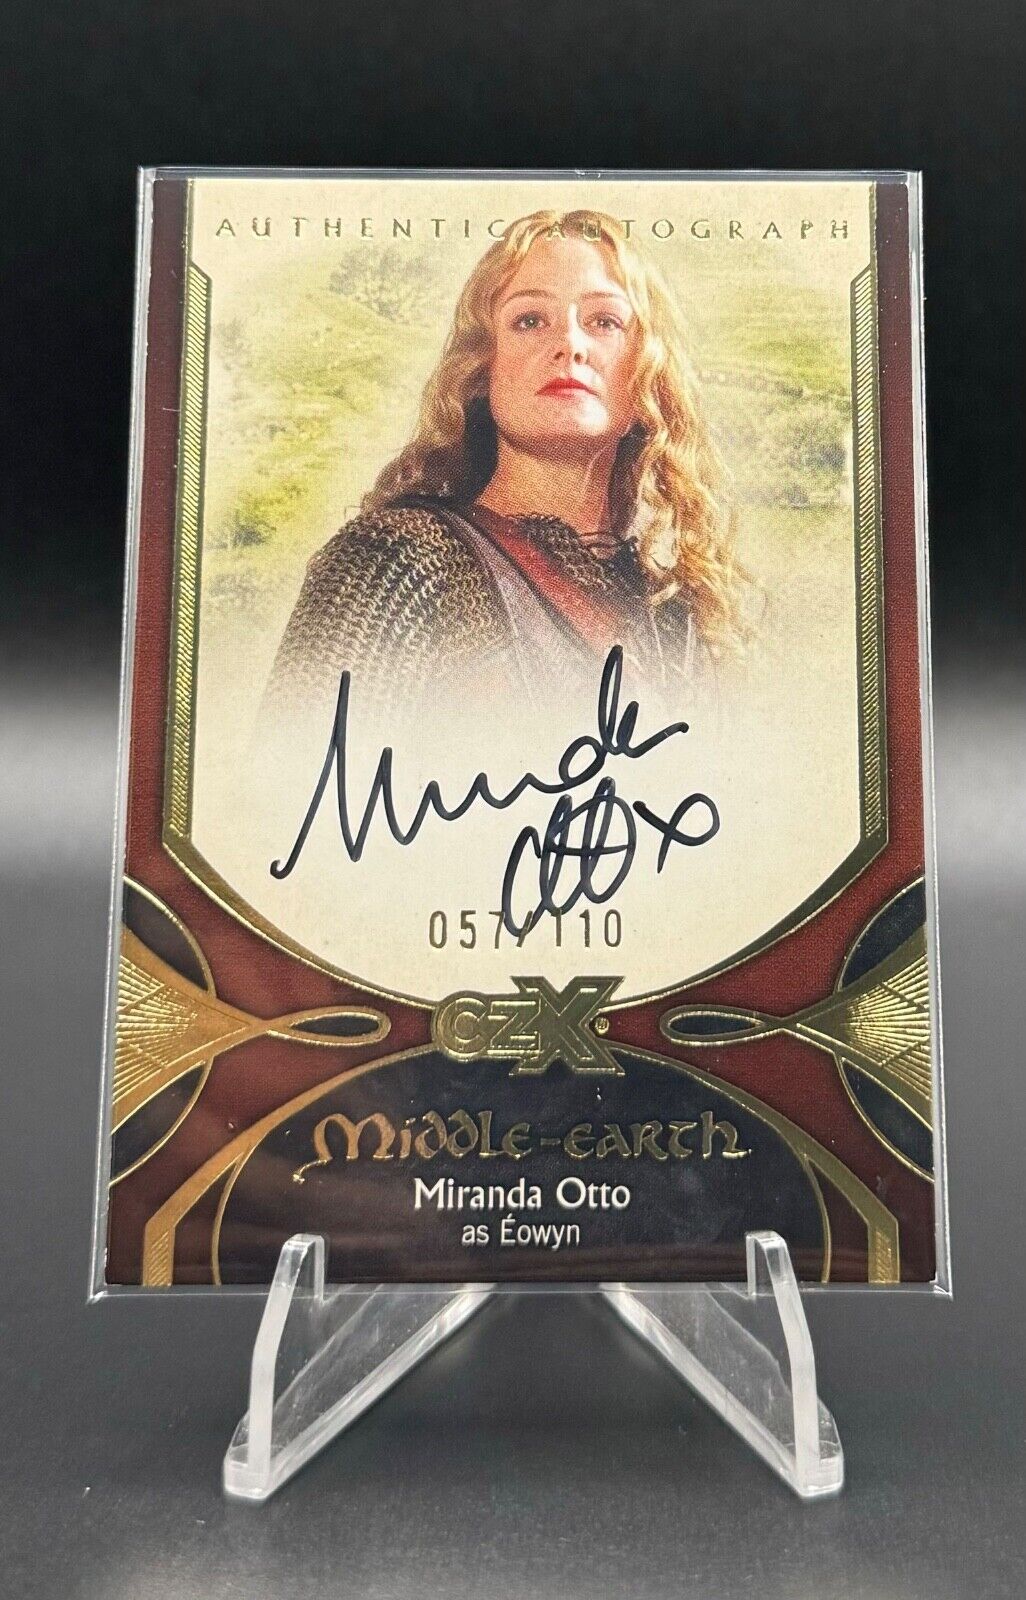 Cryptozoic CZX Middle Earth Miranda Otto as Eowyn auto insert card MO-E #57/110